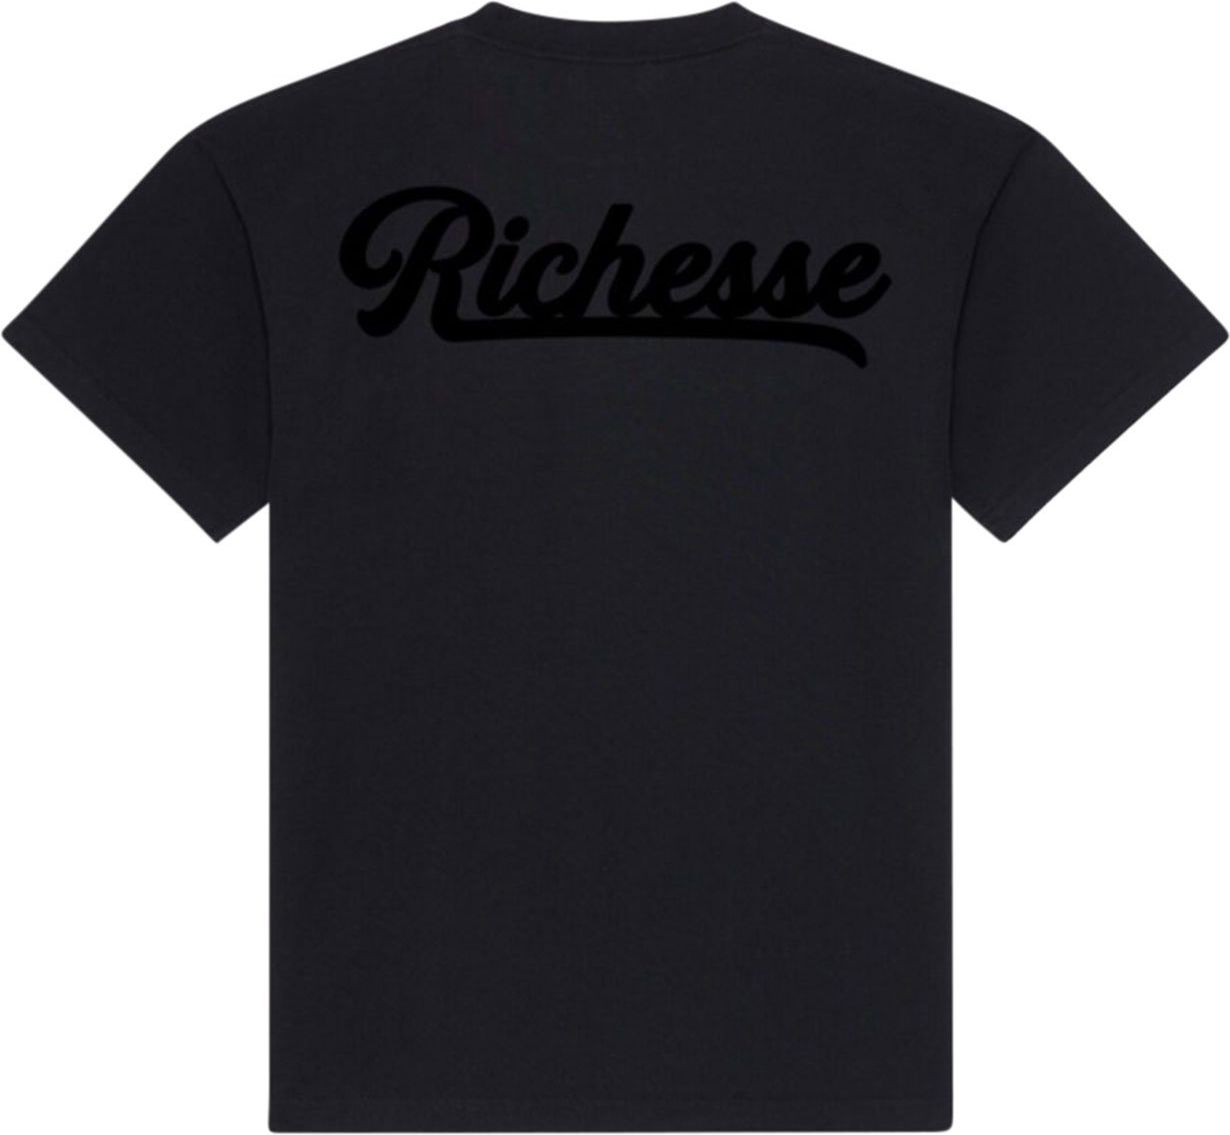 Richesse Embroided Black T-Shirt Zwart